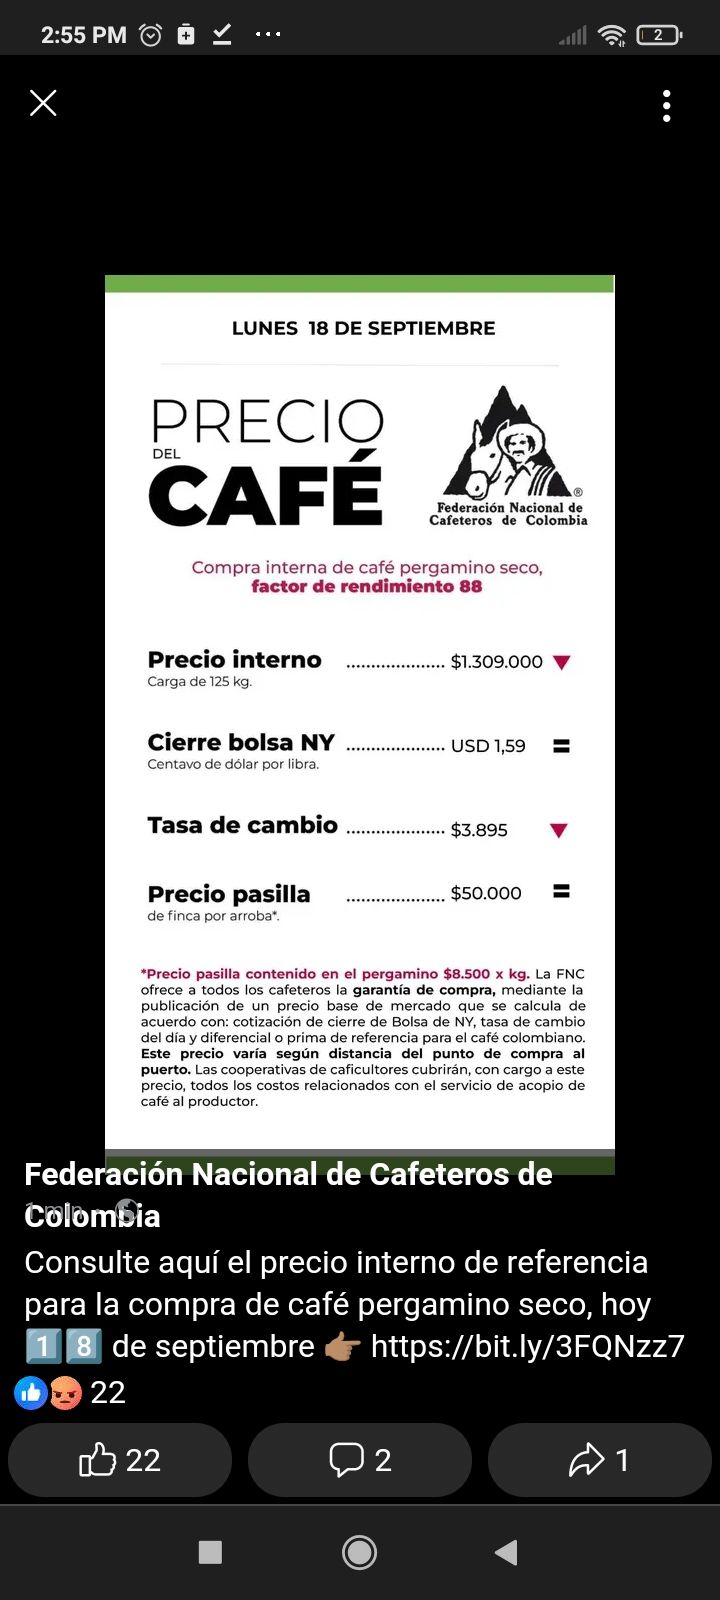 Café San Gil sas